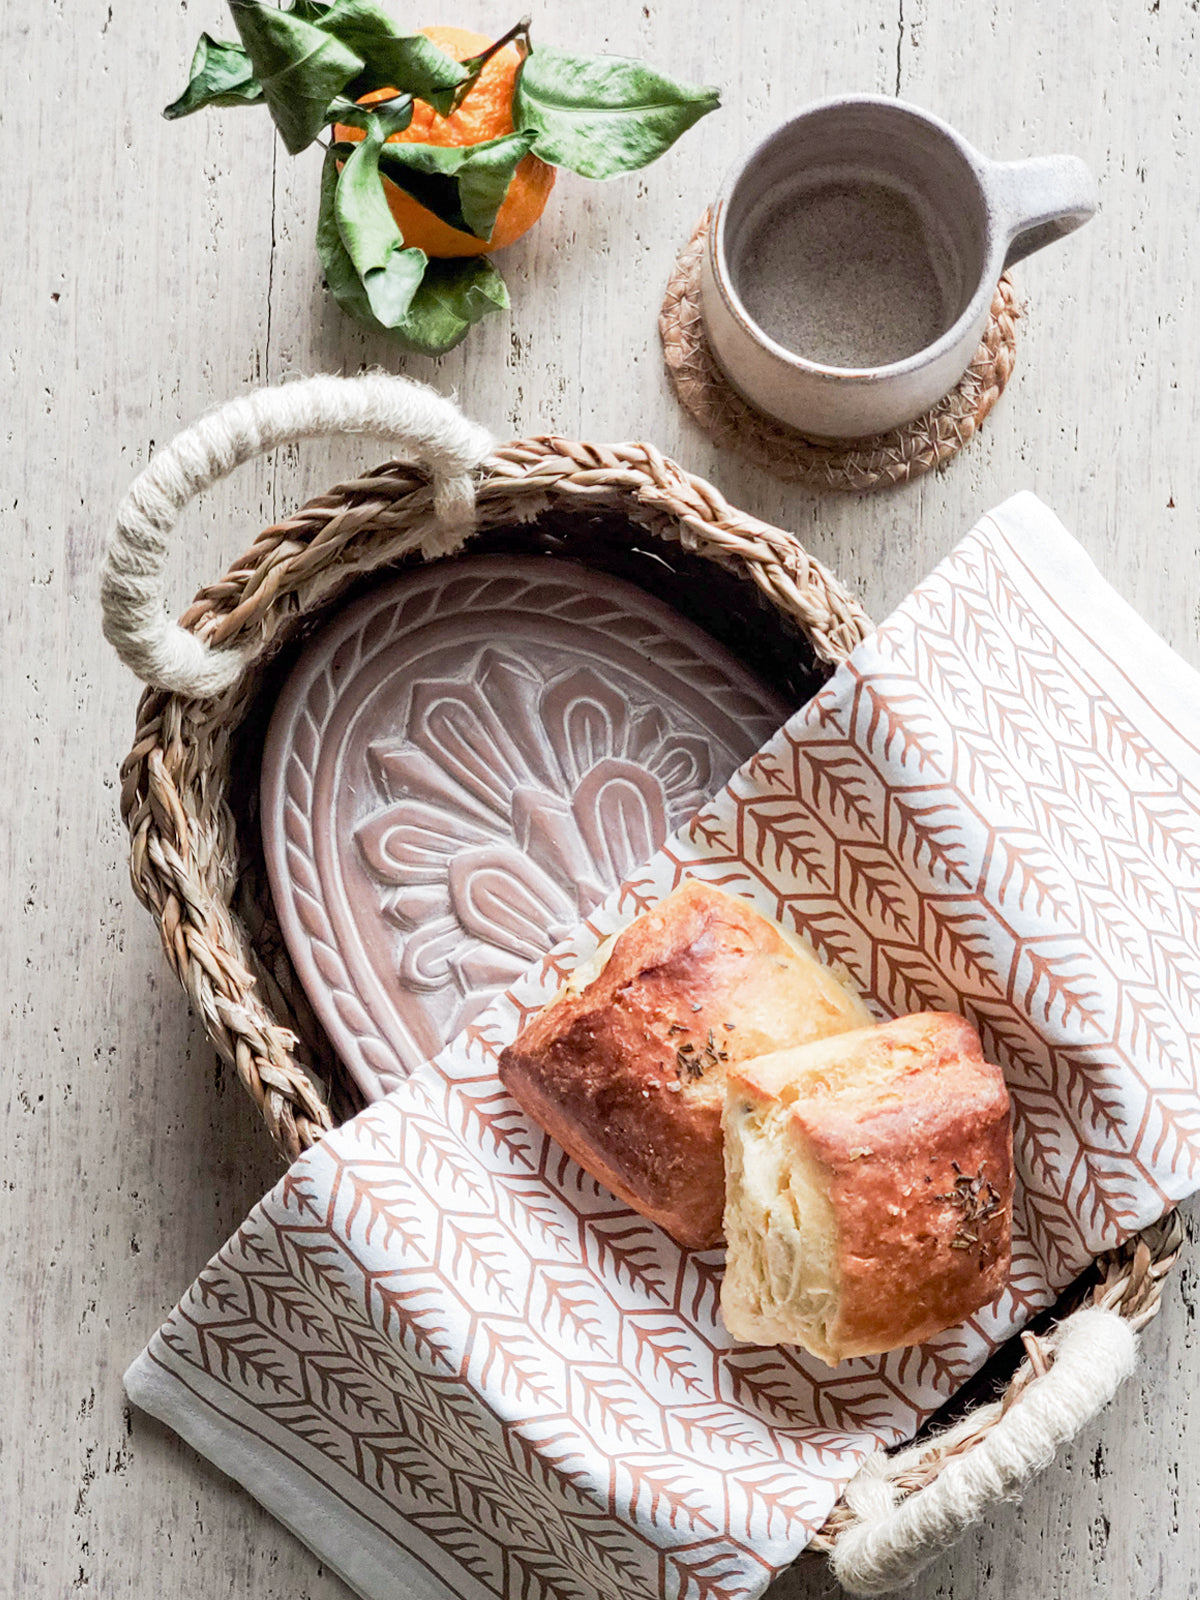 Handmade Bread Warmer & Wicker Basket - Flower Serving Accessories